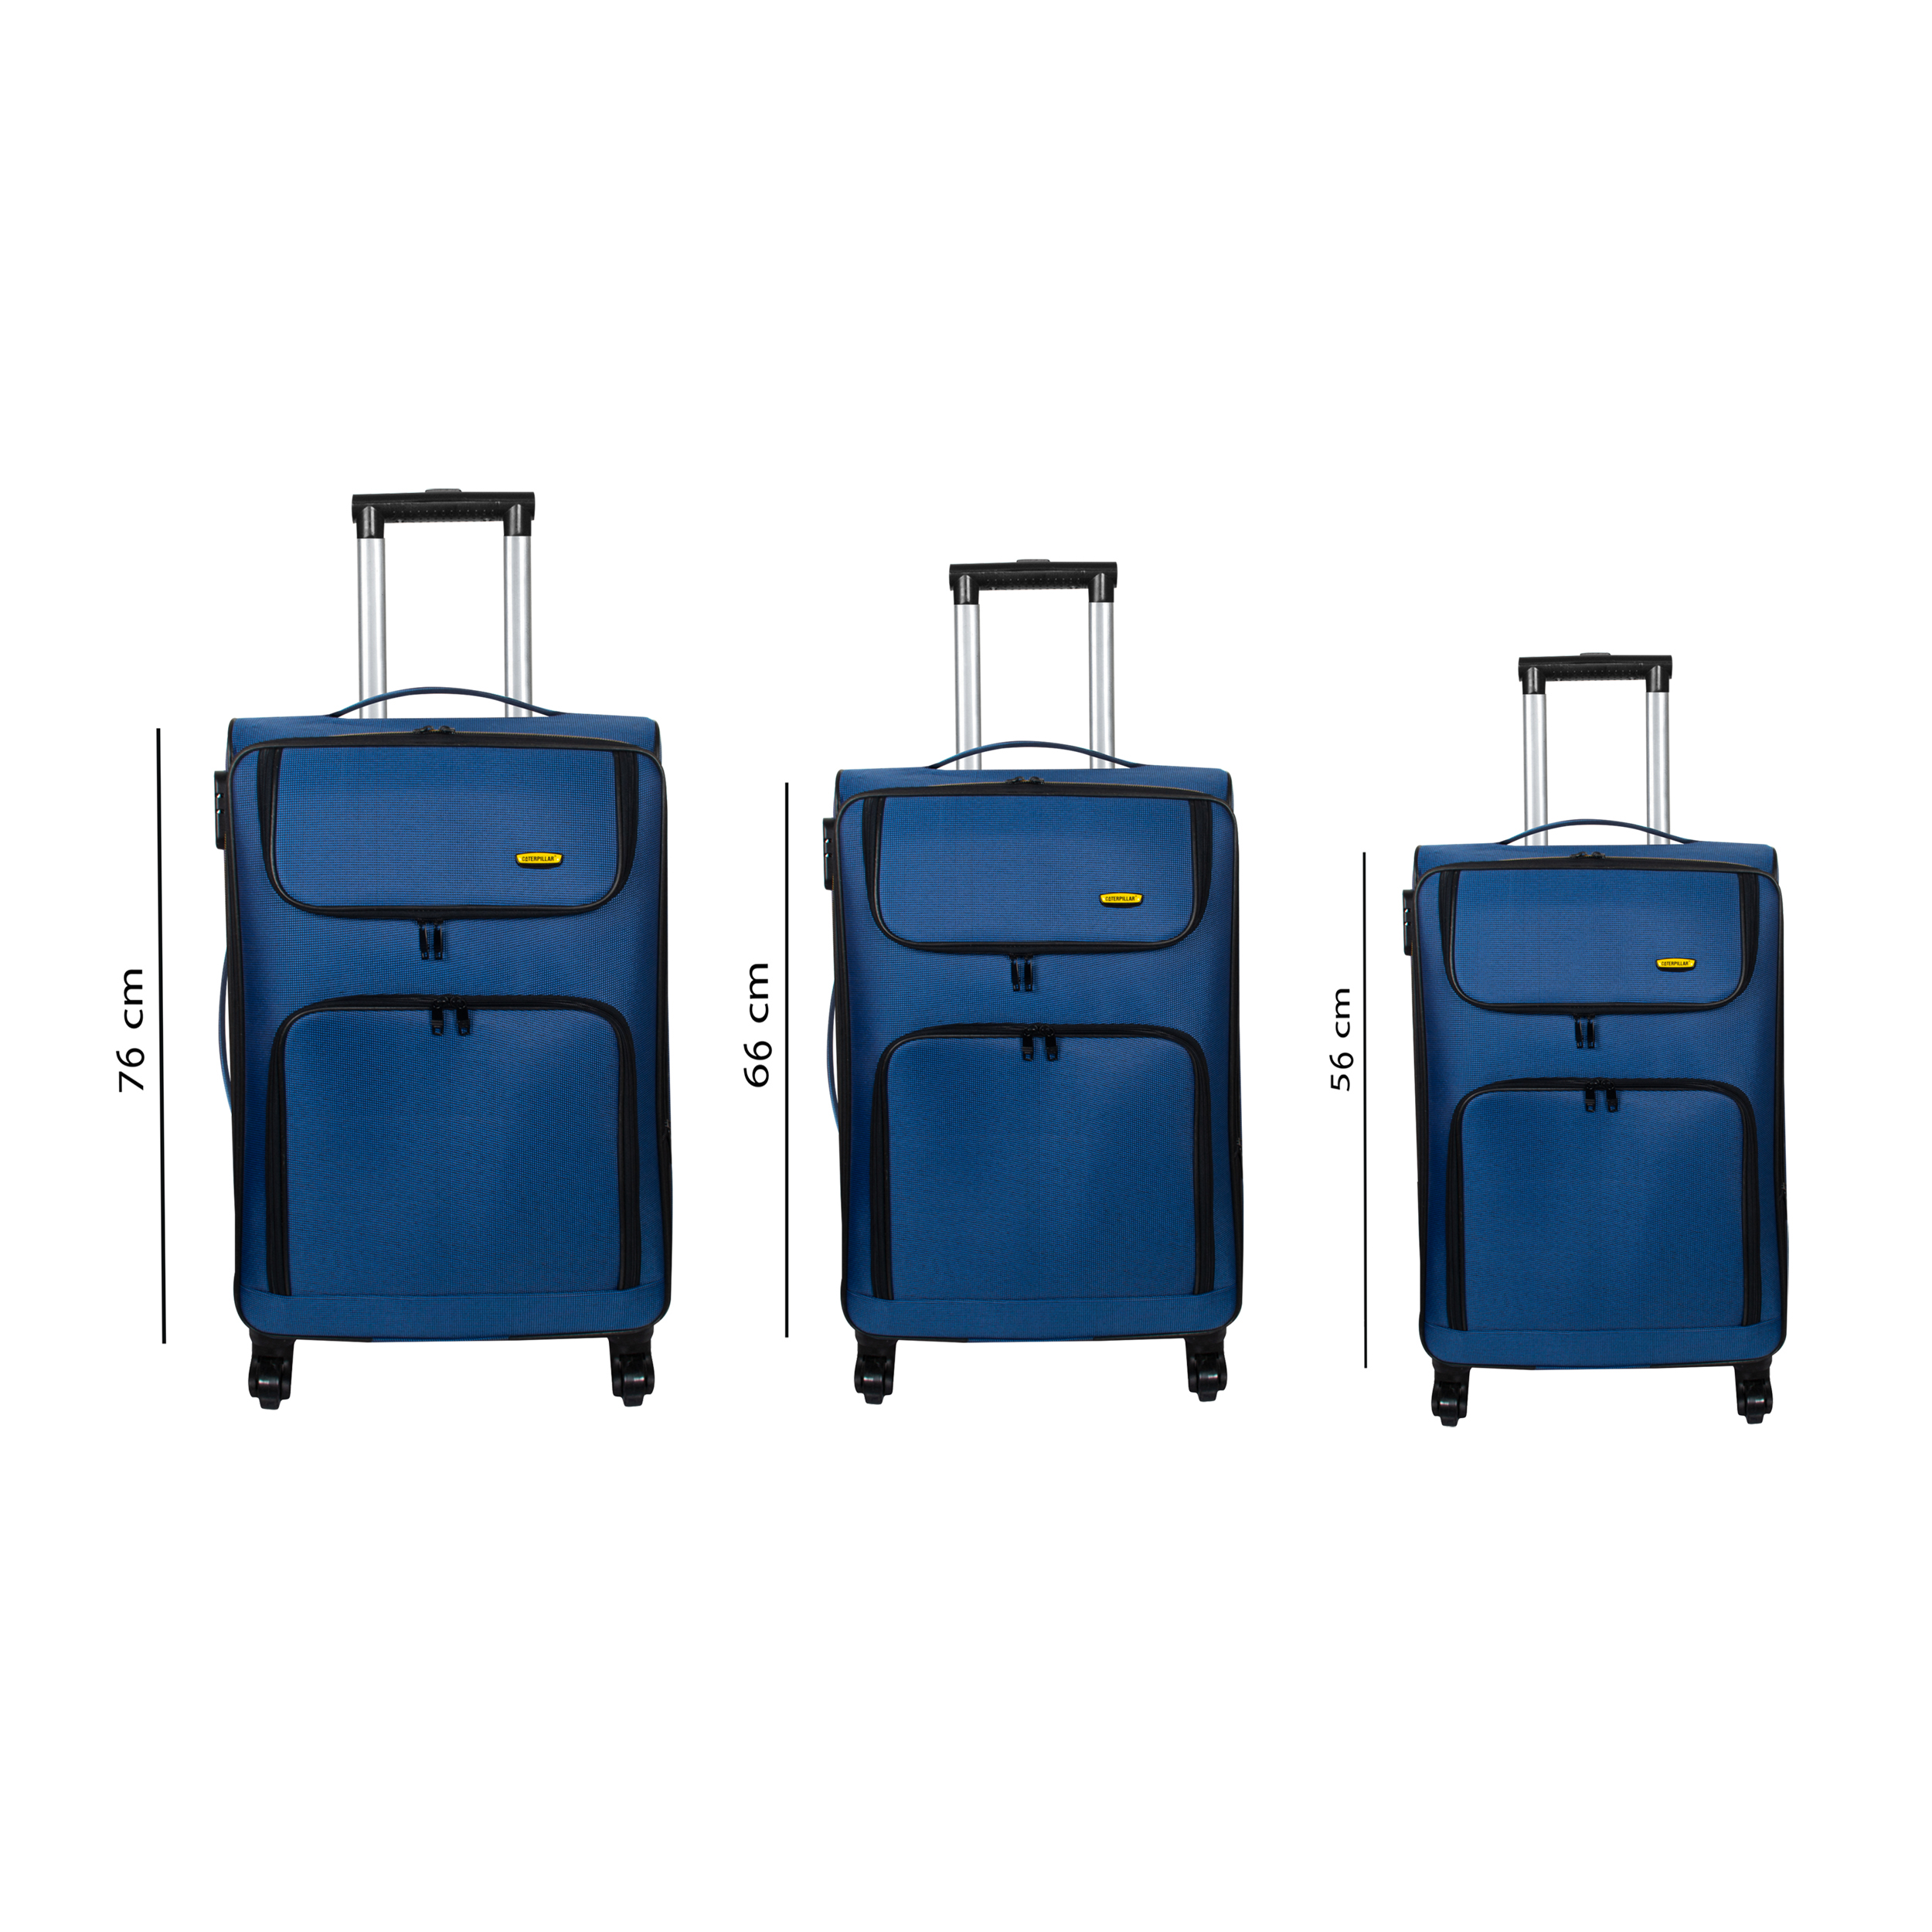 مجموعه سه عددی چمدان کاترپیلار مدل 8383